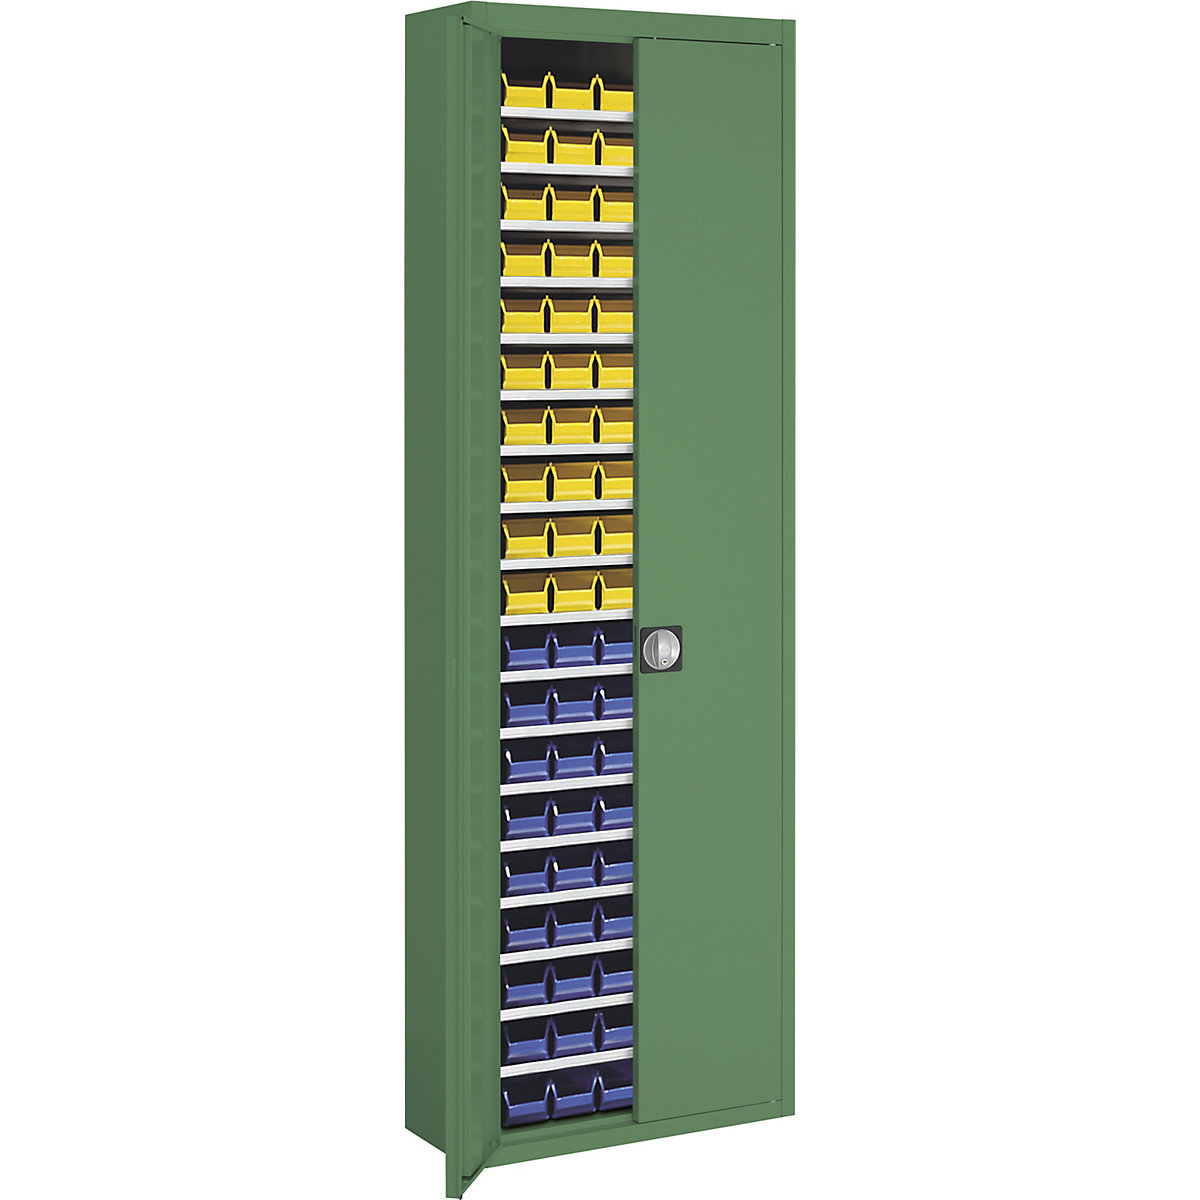 Armadio magazzino con cassette – mauser, alt. x largh. x prof. 2150 x 680 x 280 mm, tinta unita, verde, 114 cassettine-1